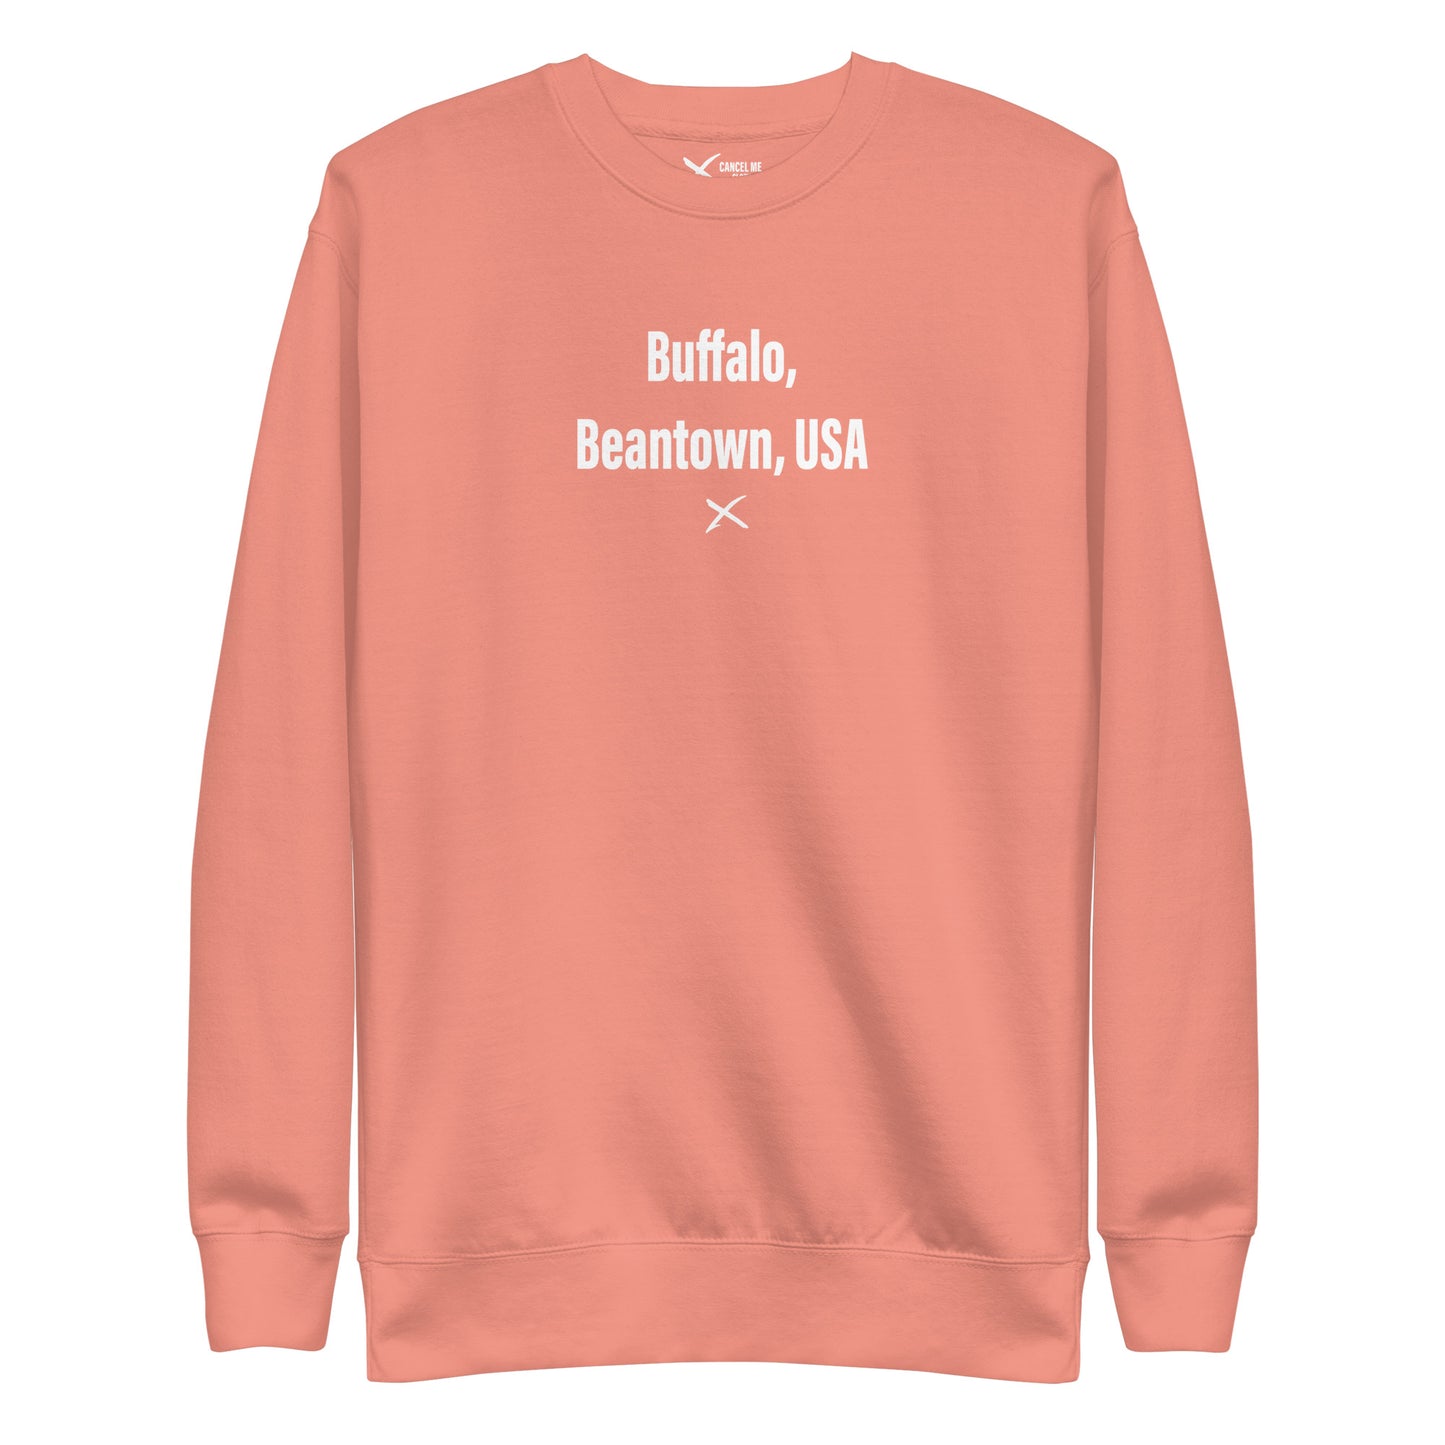 Buffalo, Beantown, USA - Sweatshirt